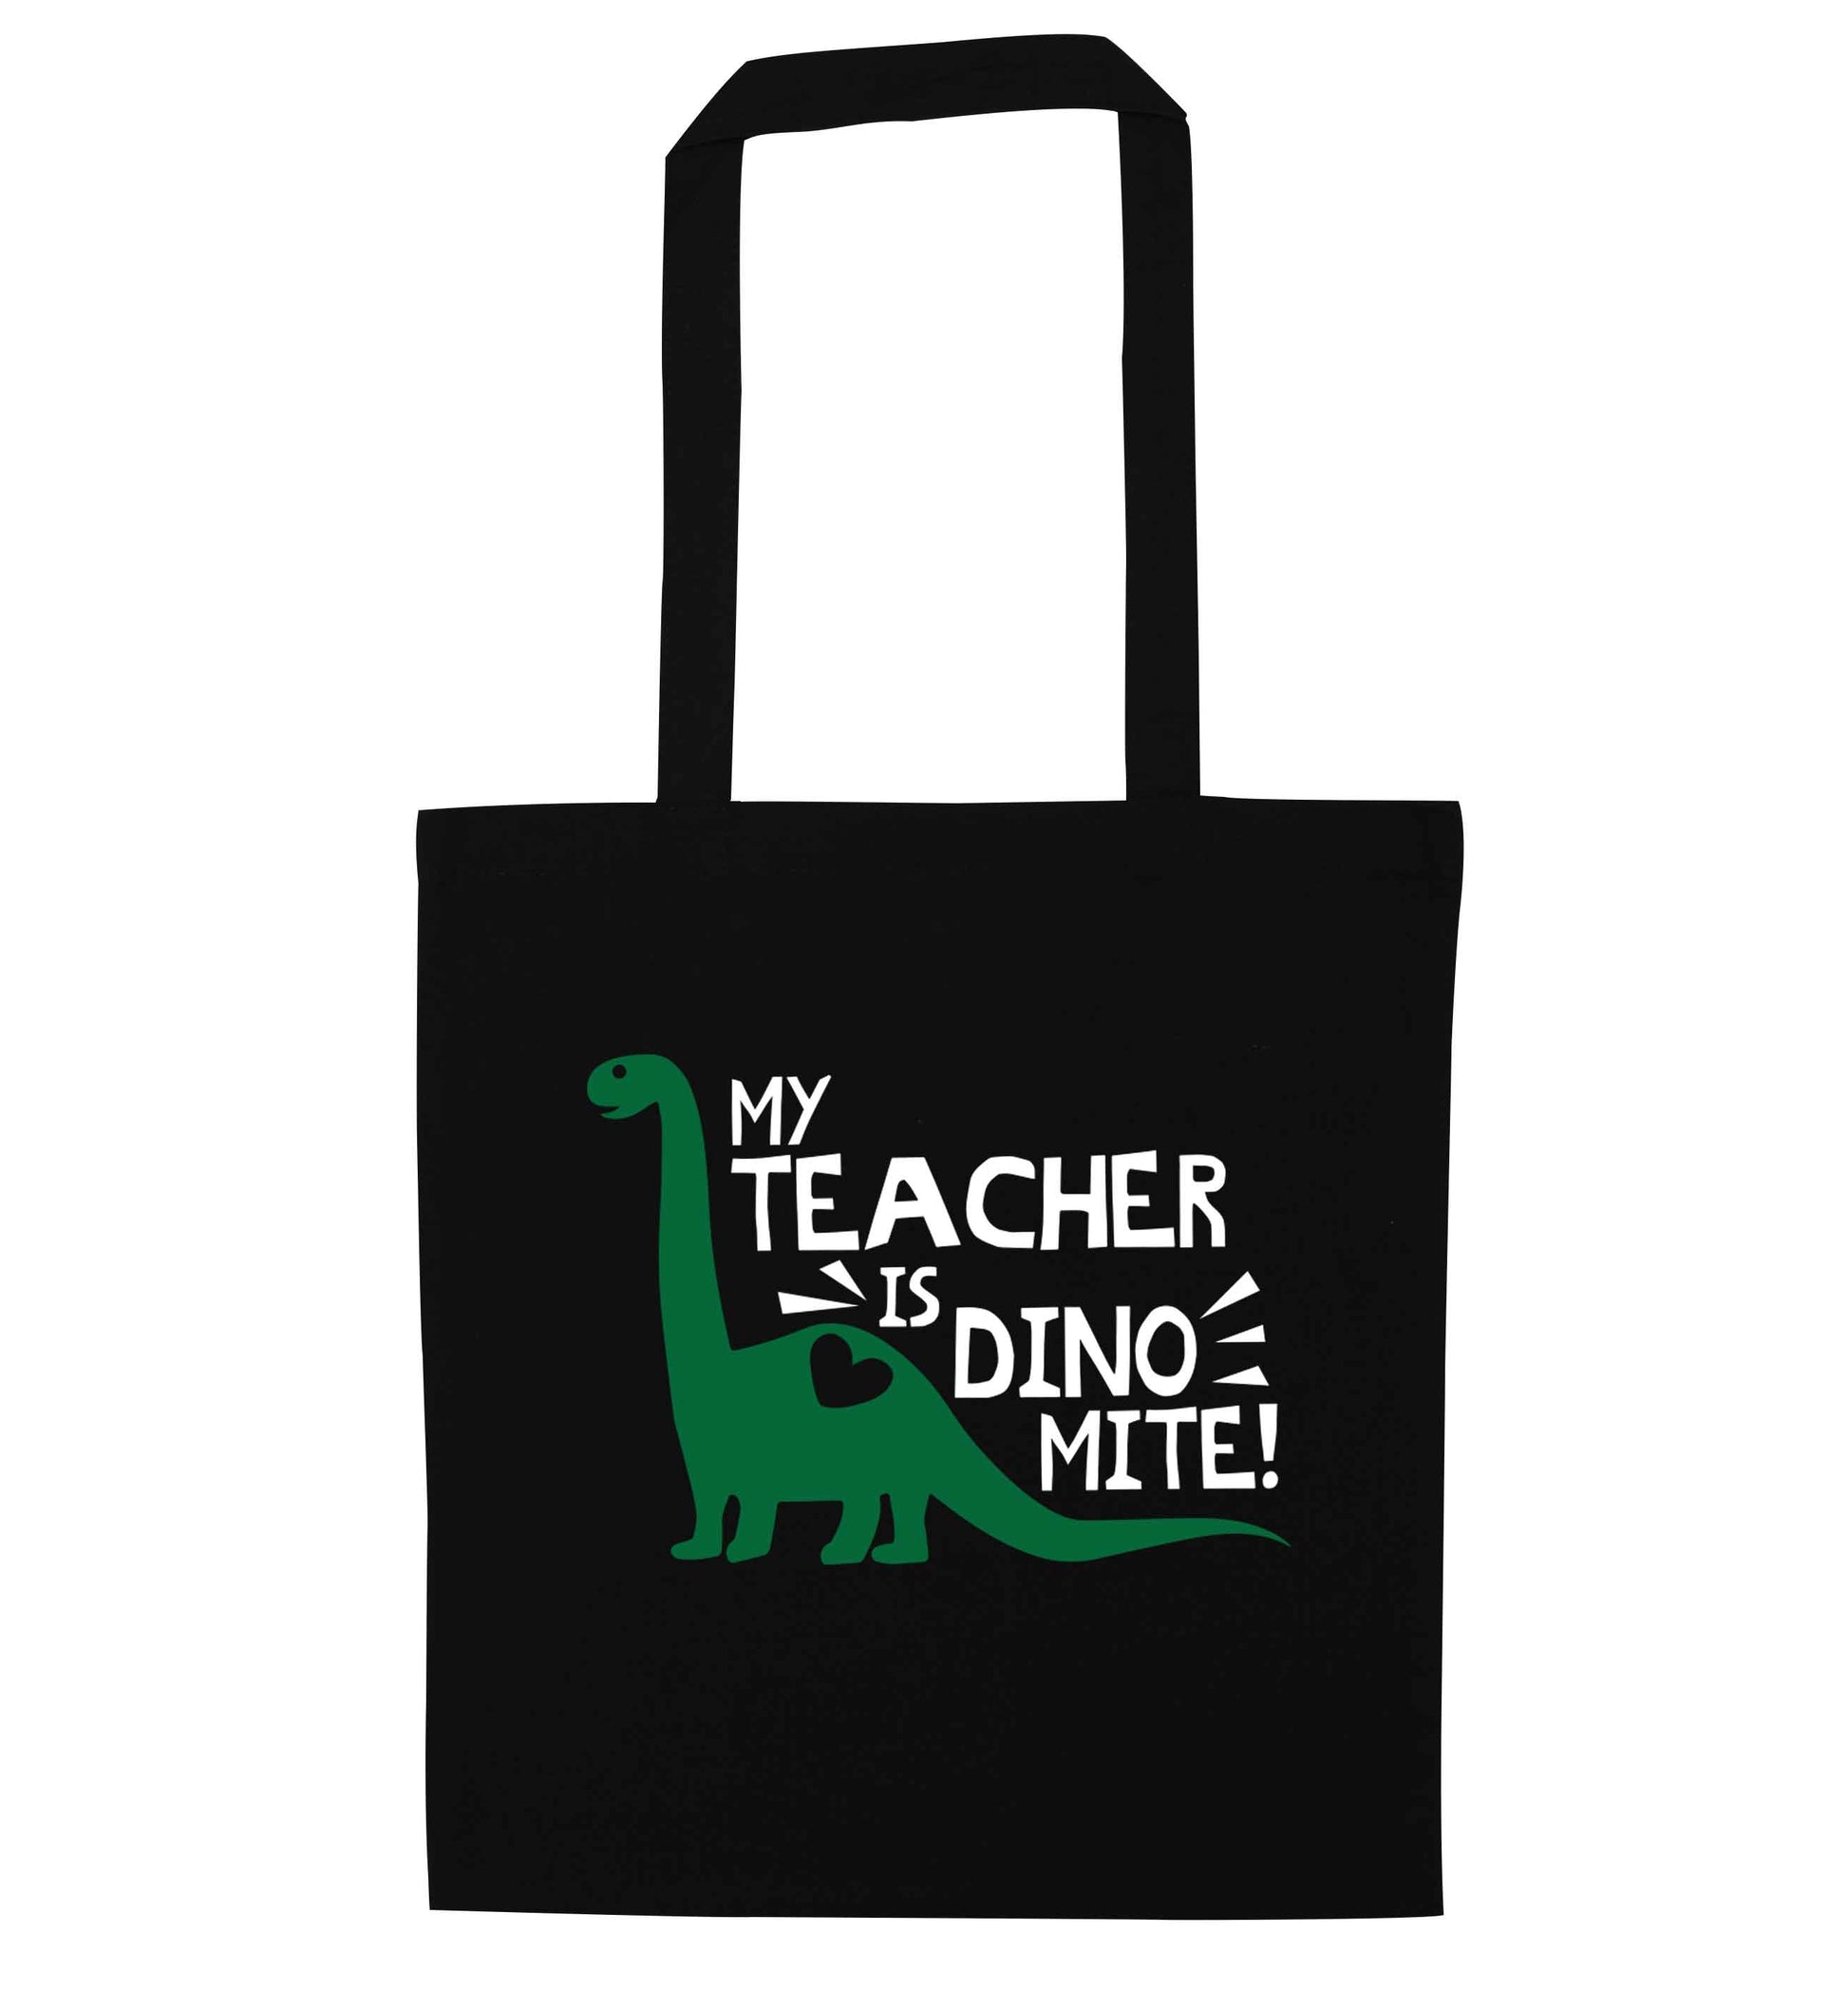 My teacher is dinomite! black tote bag